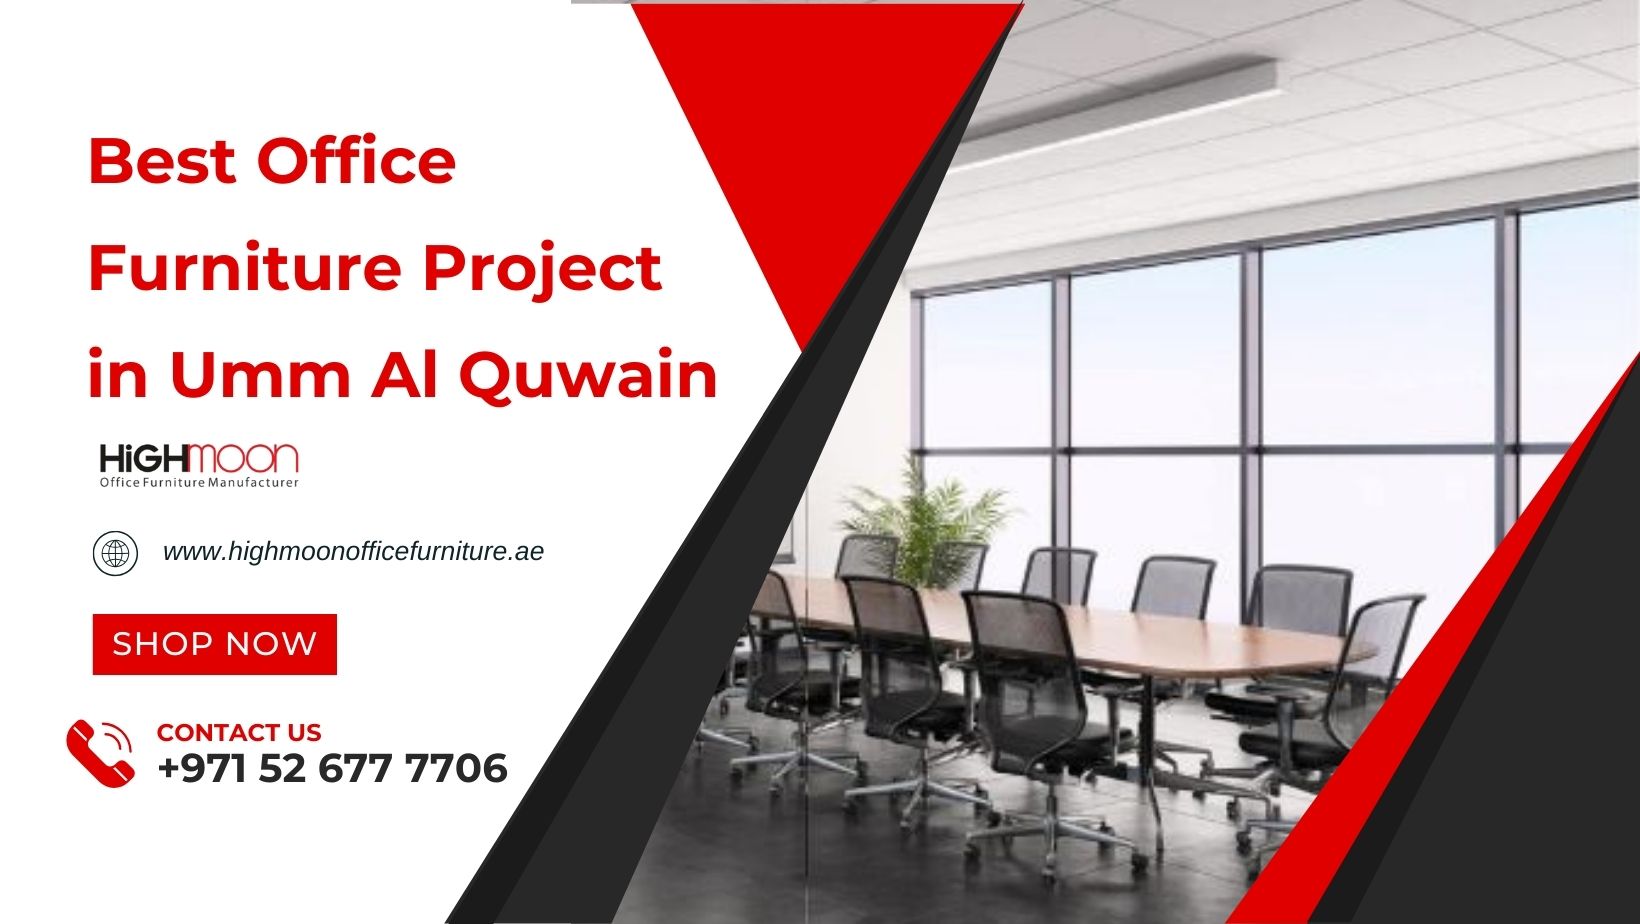 Best Office Furniture Project in Umm Al Quwain